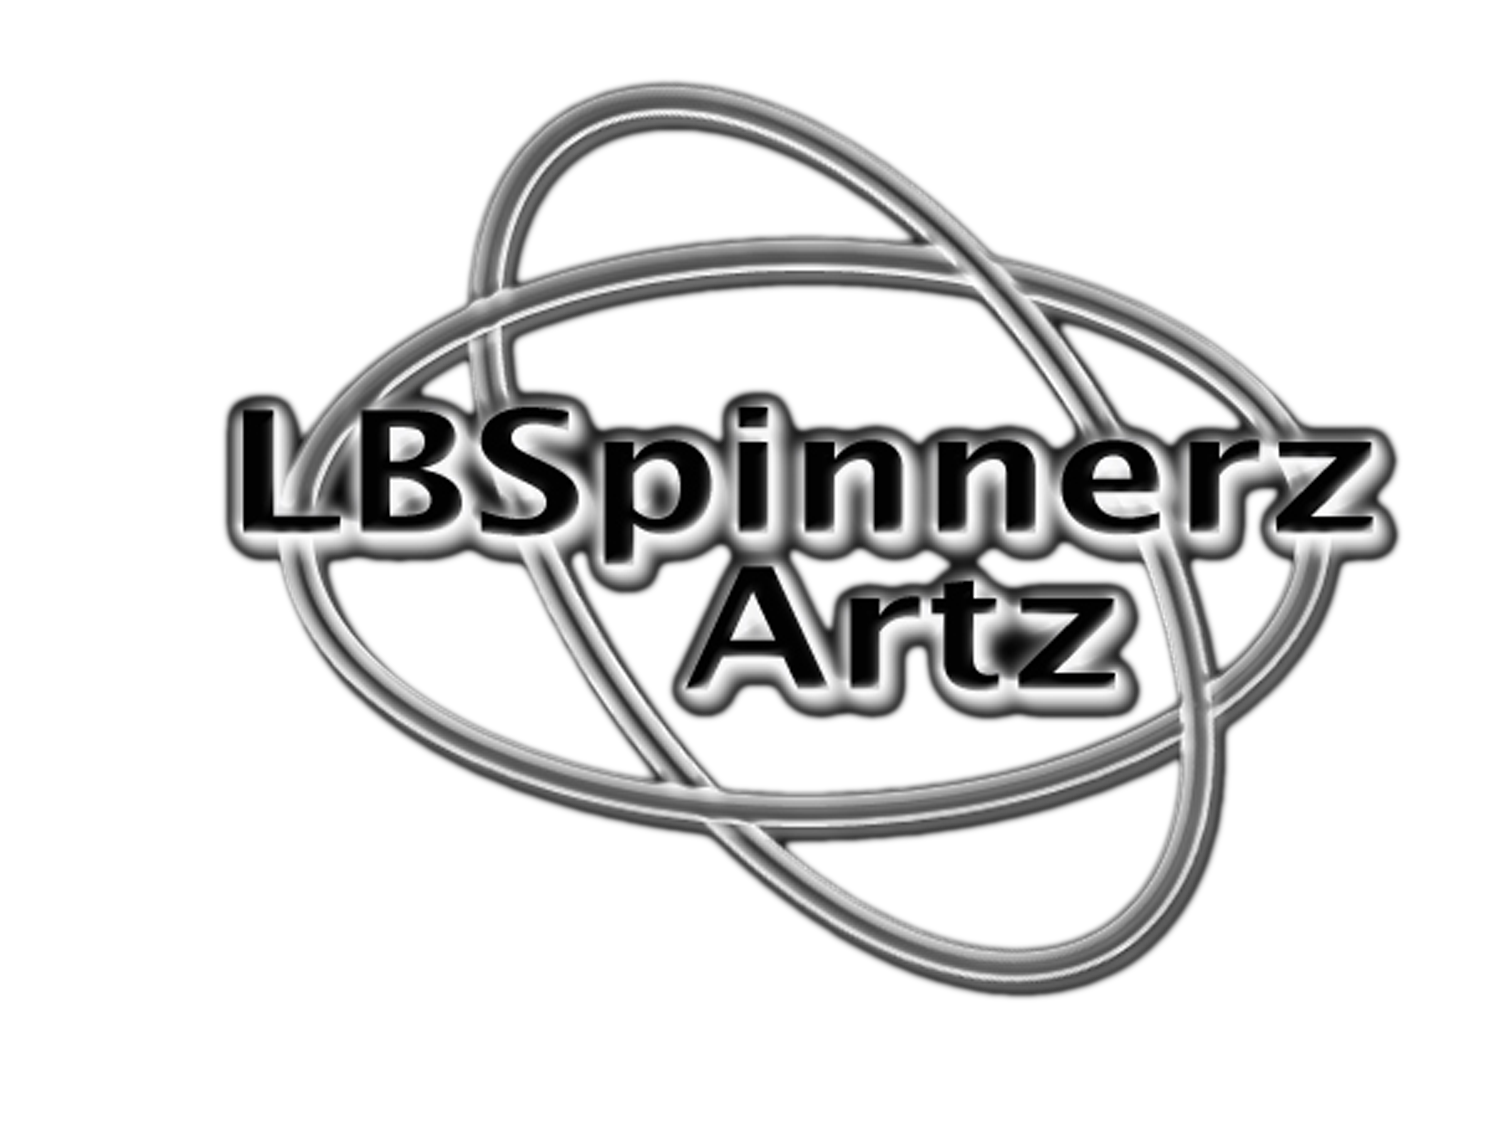 LBSpinnerZ ArtZ